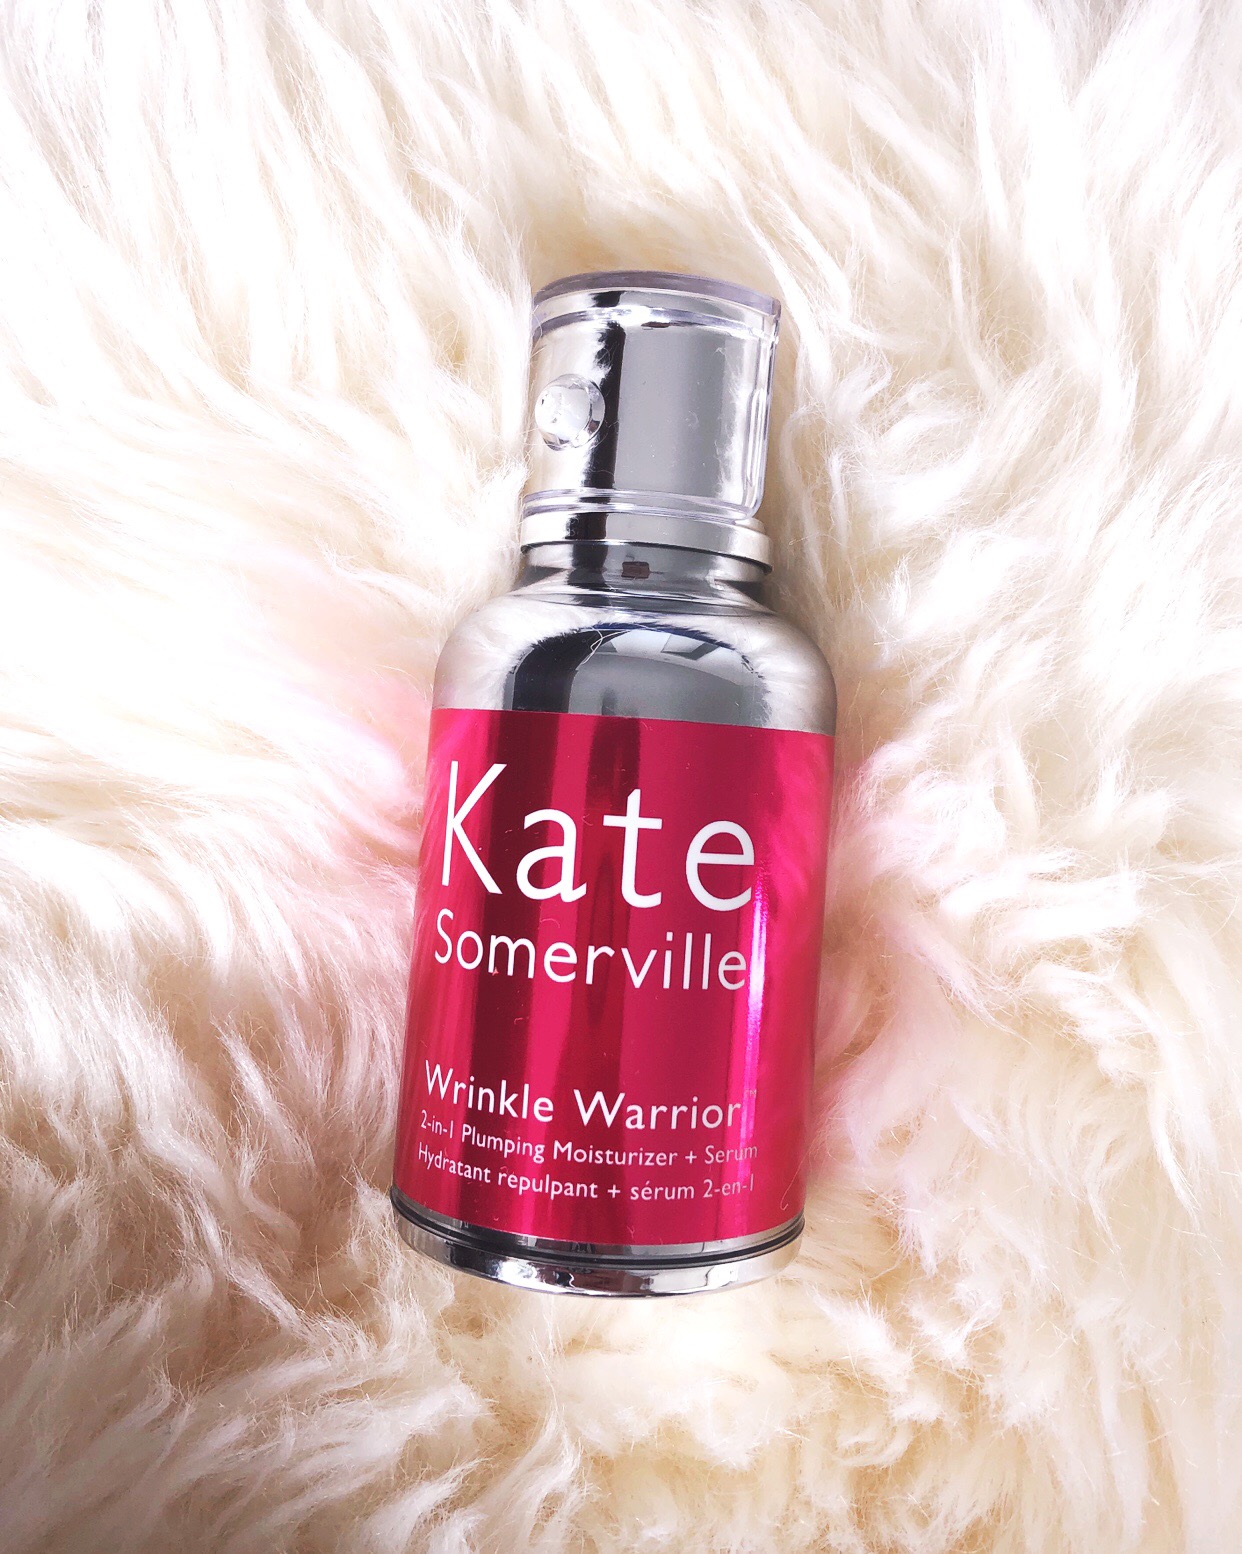 Kate Somerville Wrinkle Warrior Serum